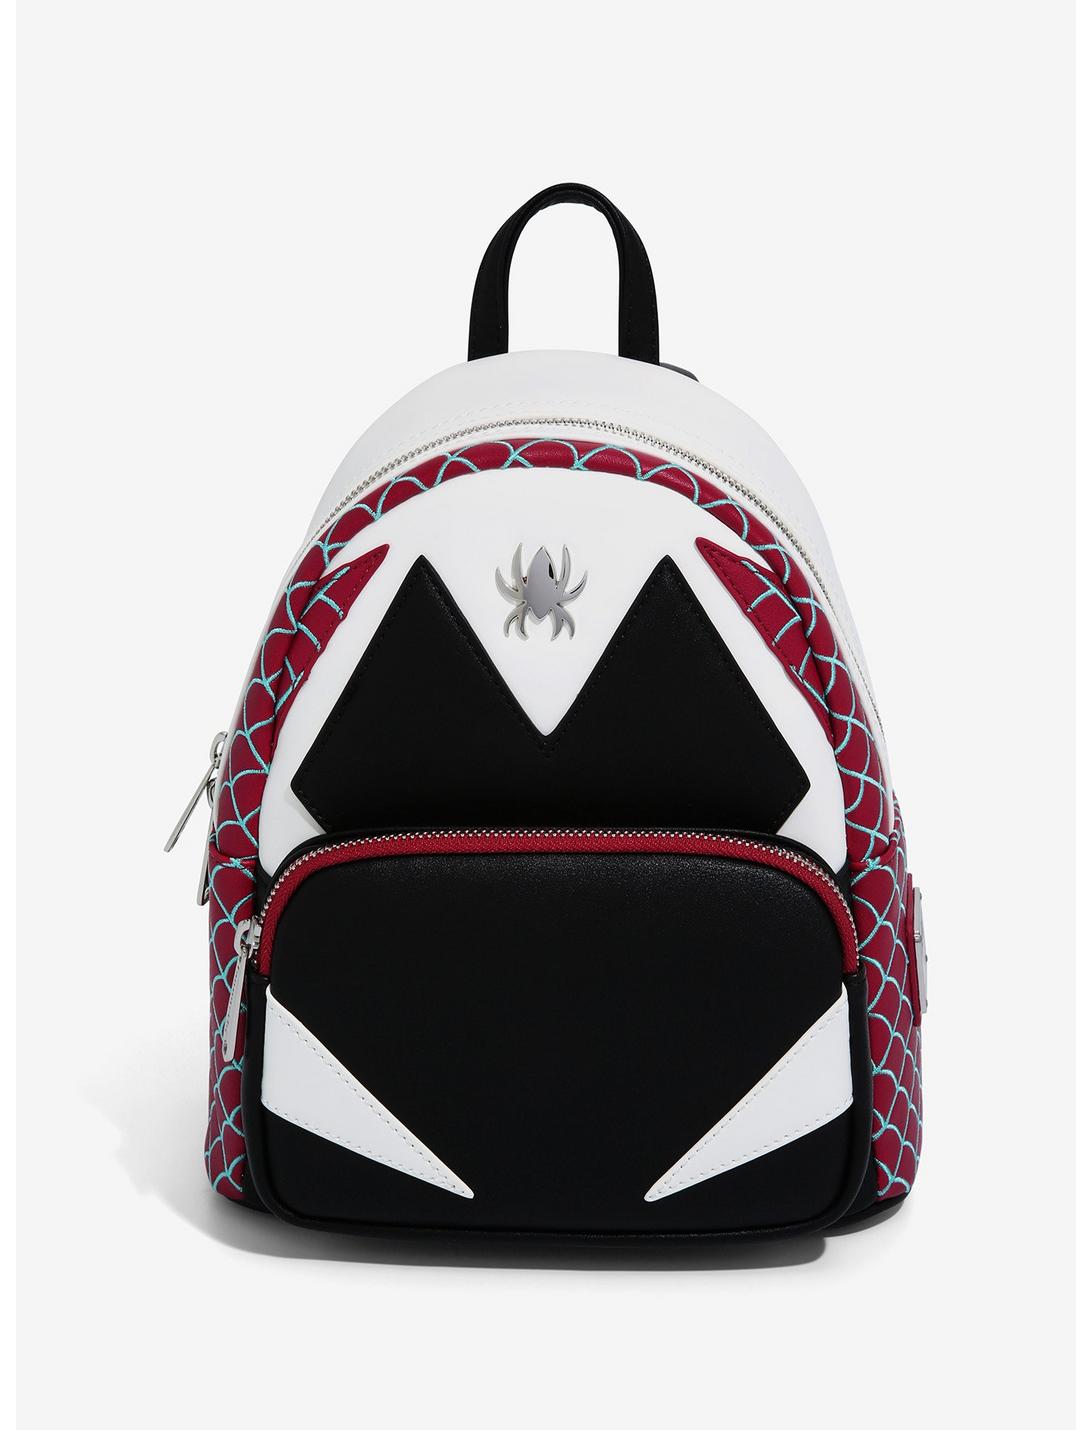 Marvel Spider-Gwen Boy's Girl's Kids Toddler Backpack Travel Bag 10" x 8" NWT